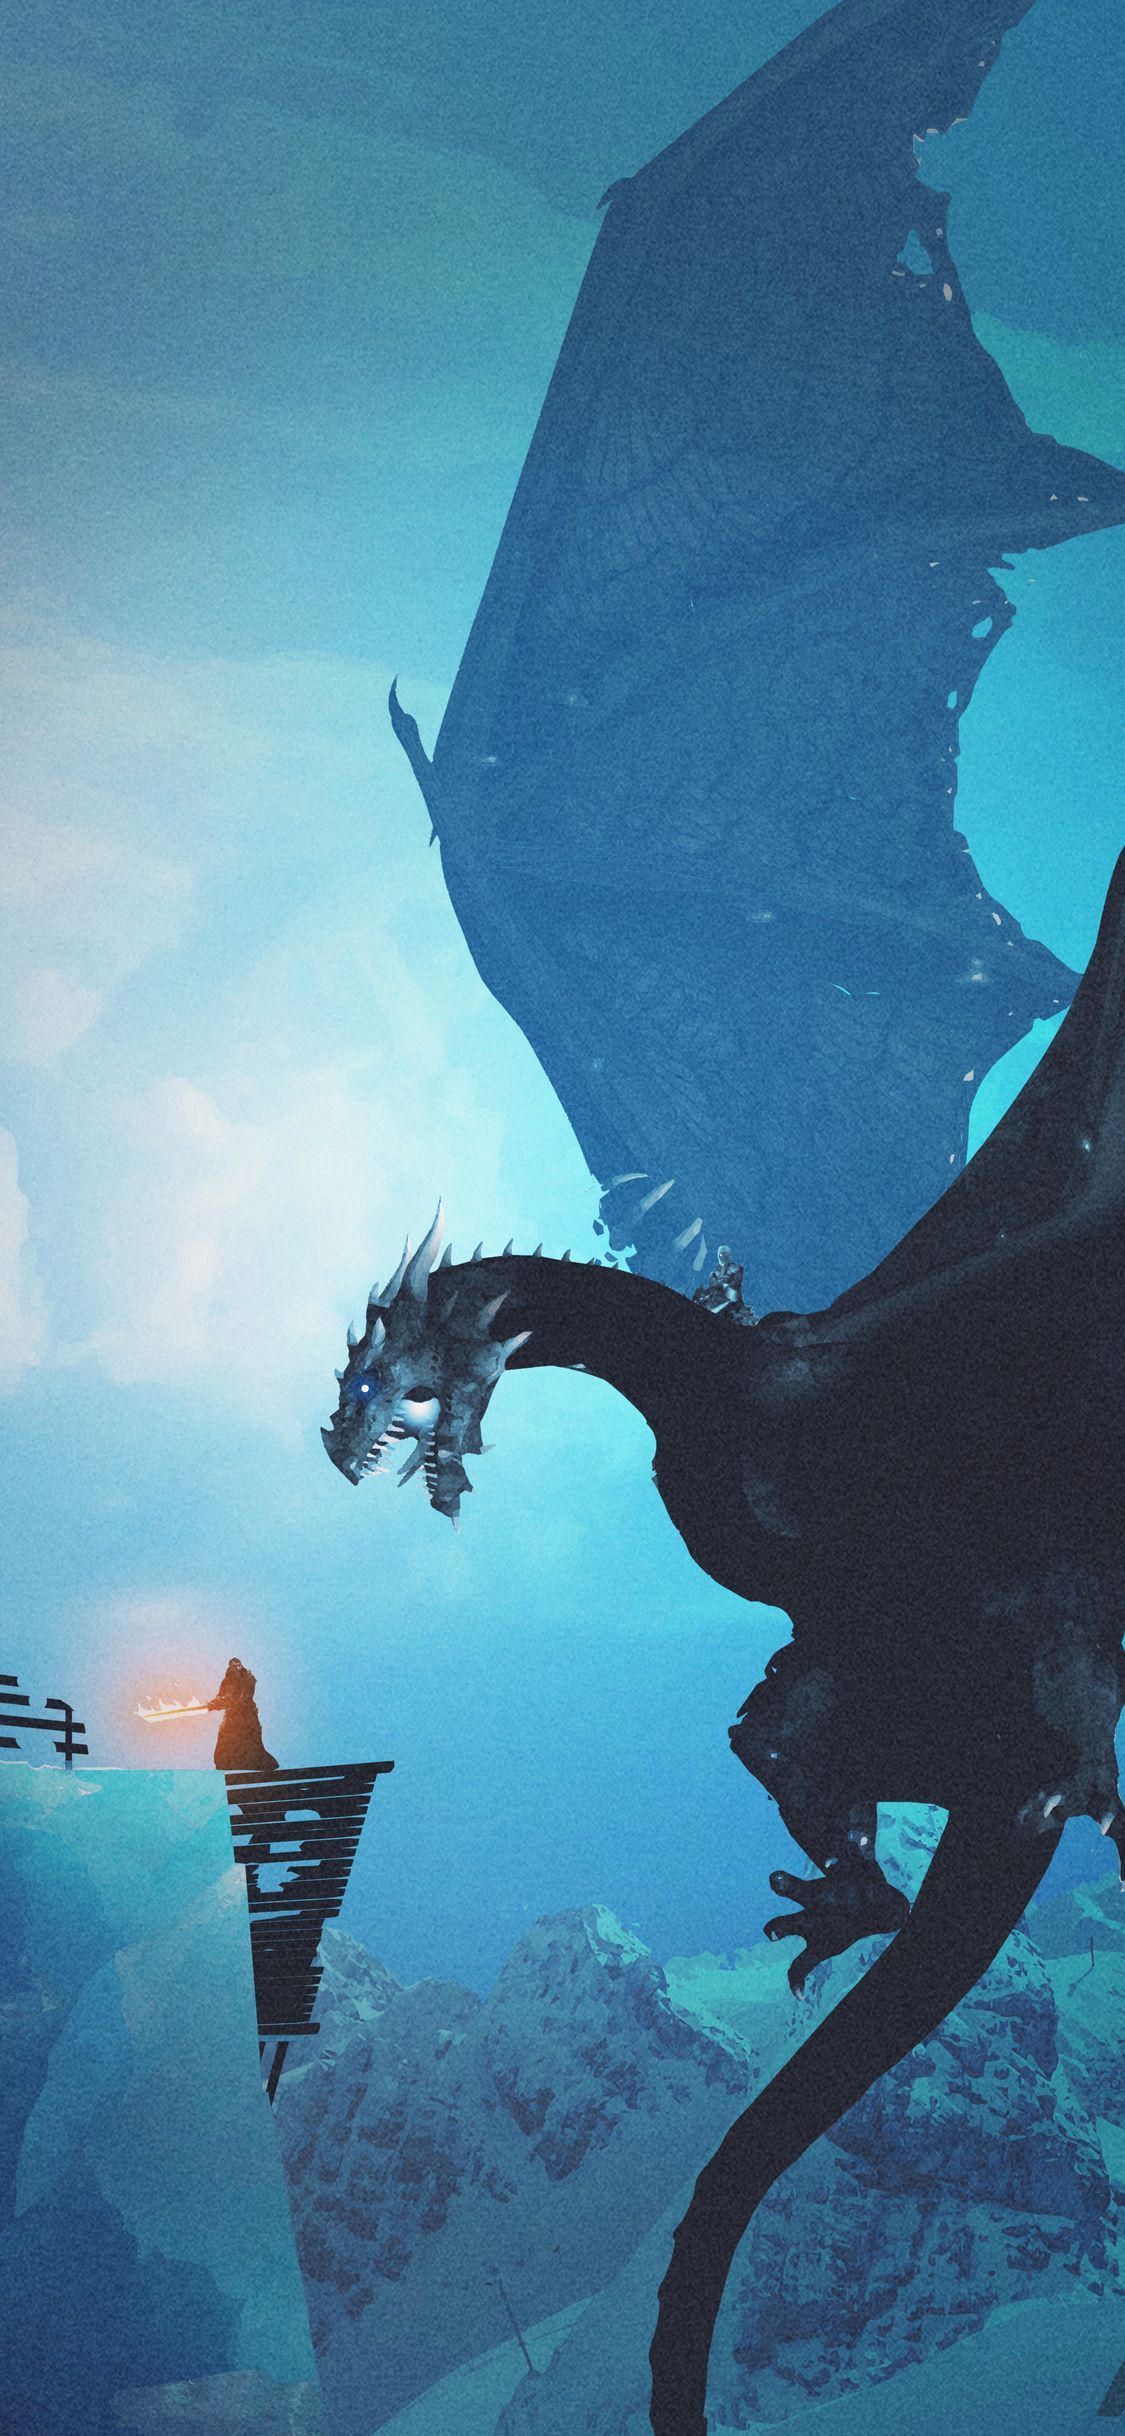 Dragon Game of Thrones iPhone Wallpaper Free Dragon Game